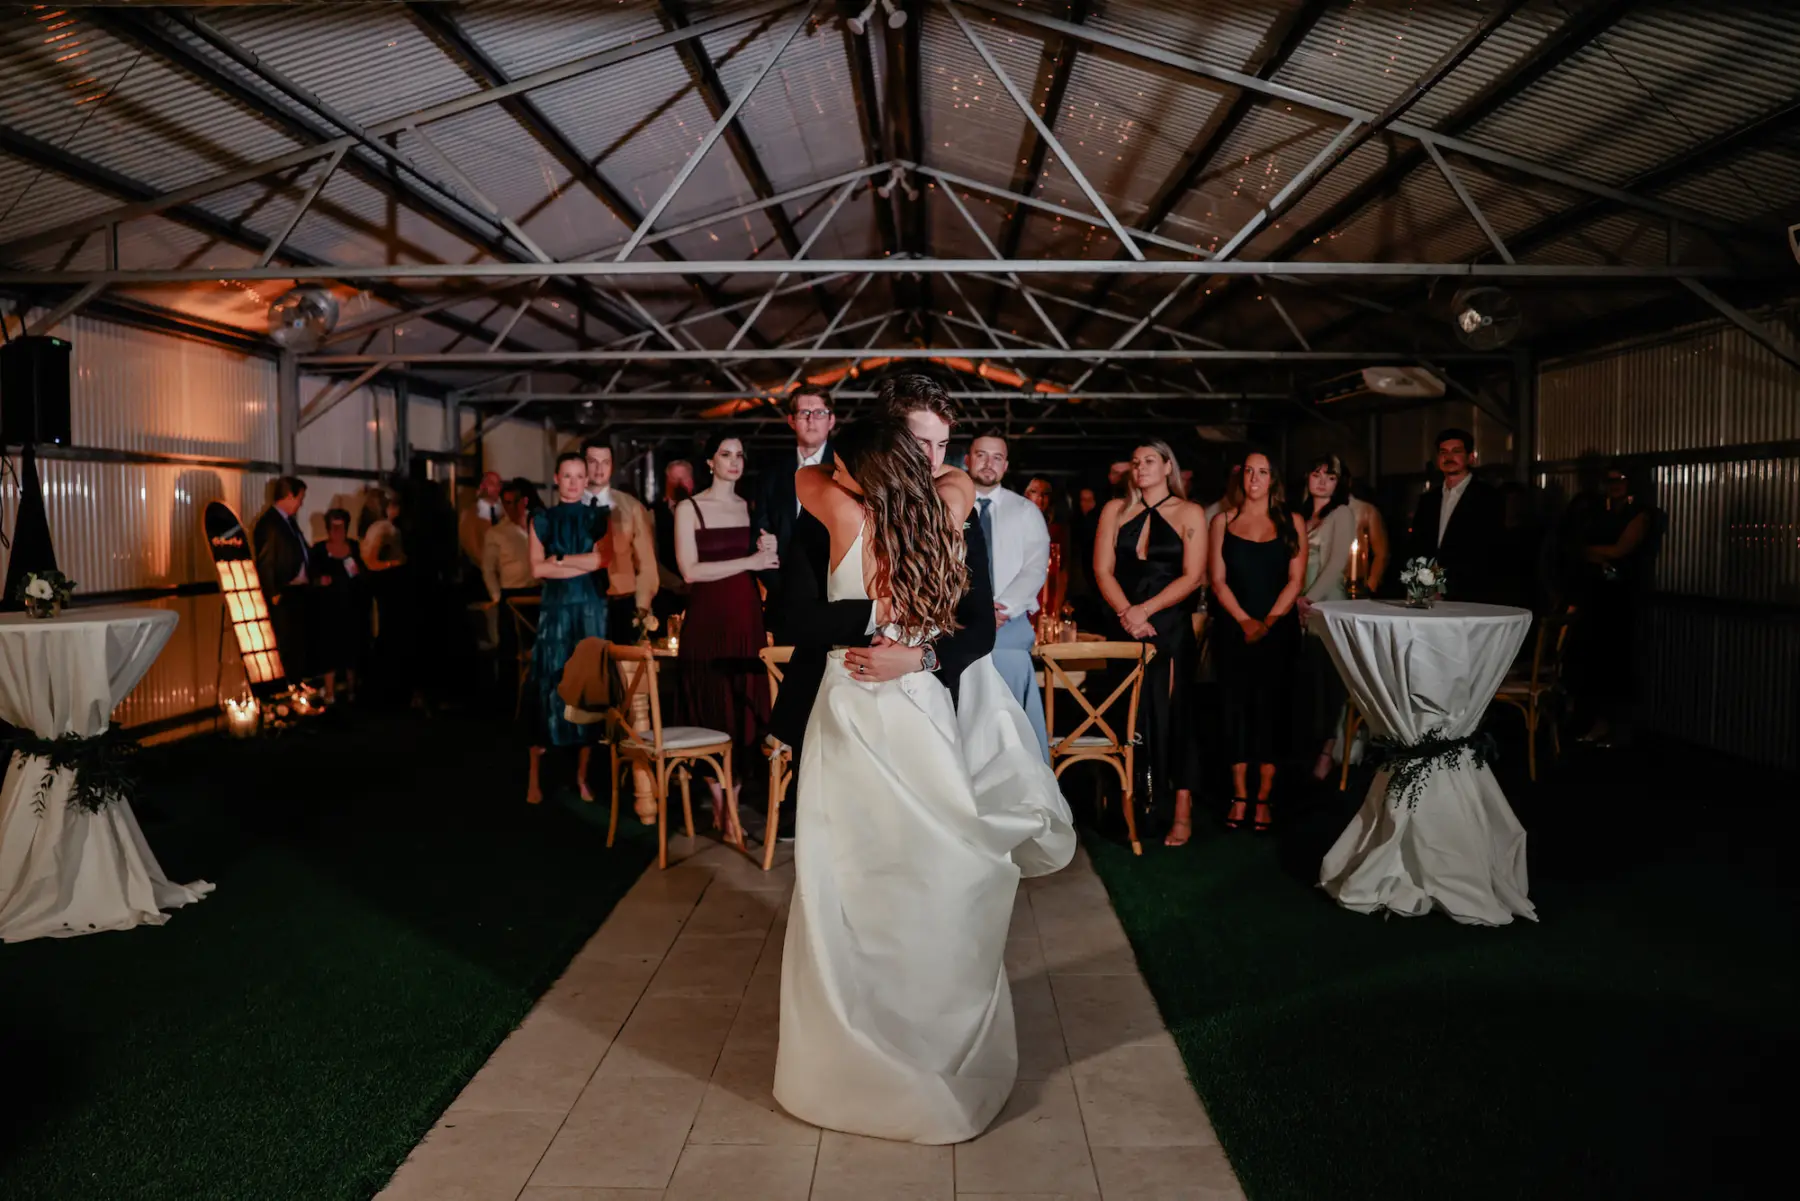 Wedding First Dance Portrait | Tampa Bay DJ Grant Hemond & Associates